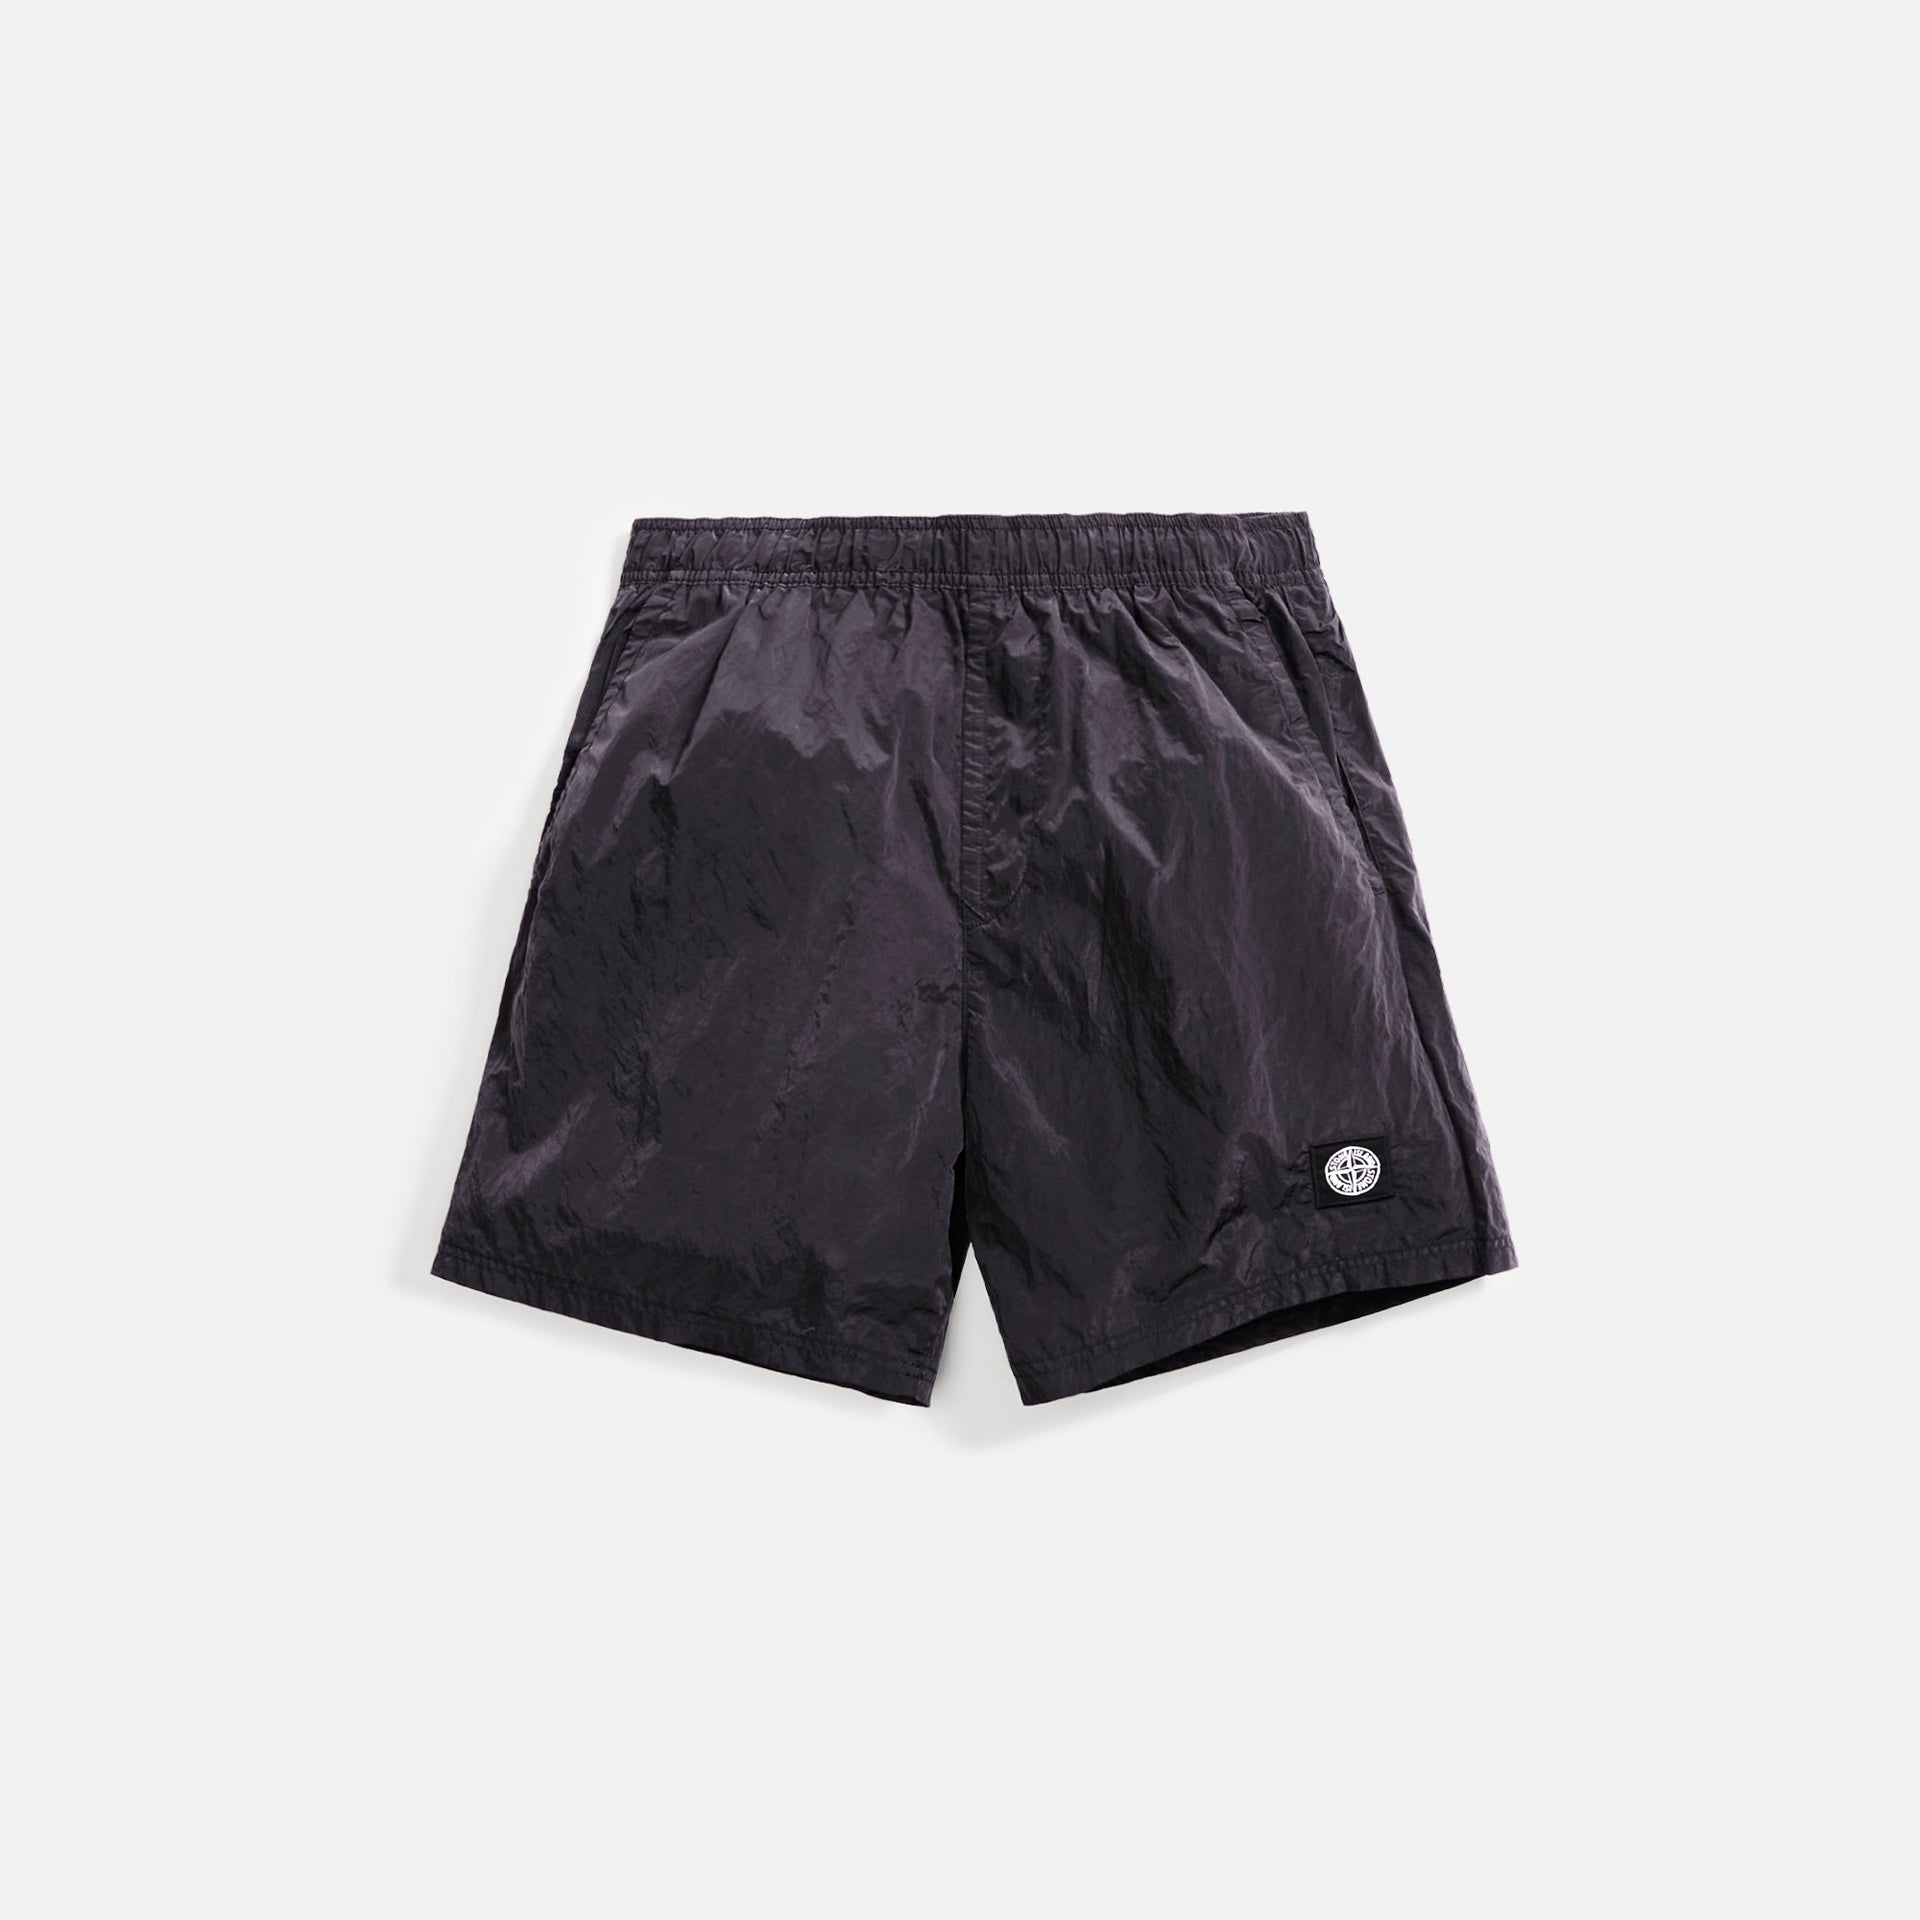 Stone Island Nylon Metal Garment Dyed Swim Shorts - Peltro